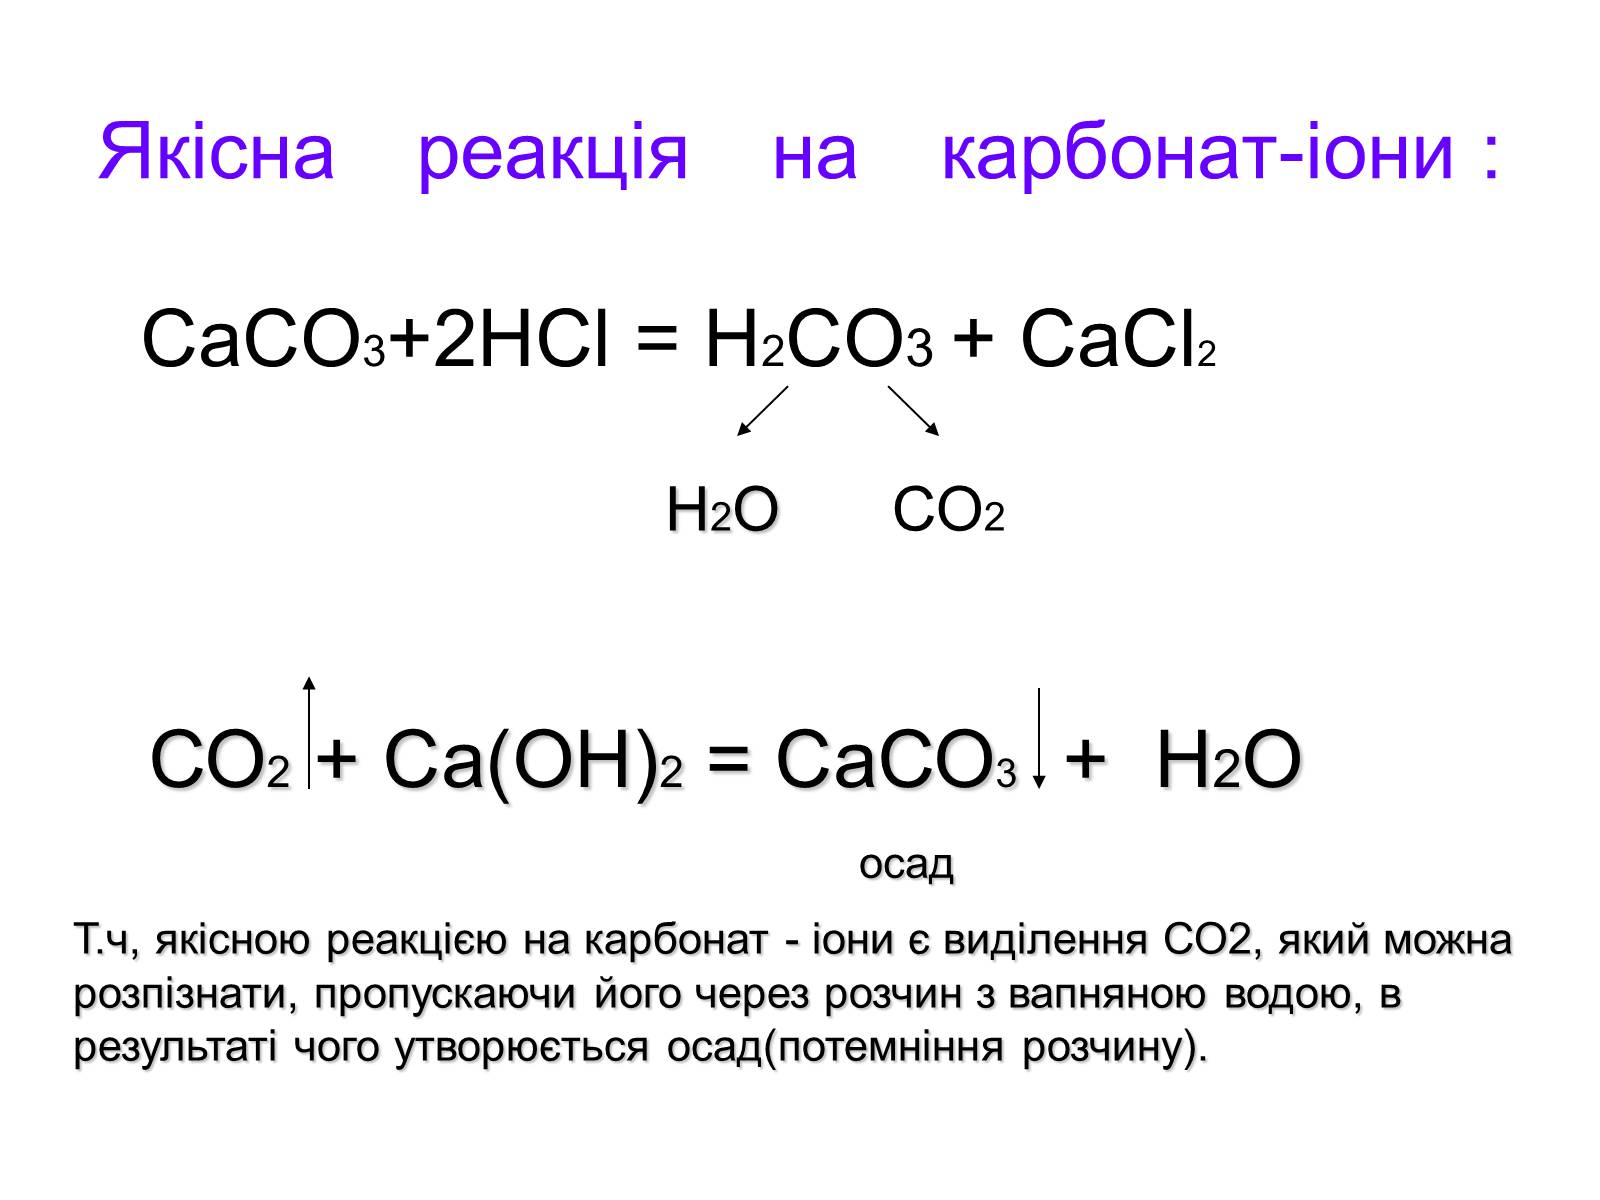 Сасо3+со2+н2о. Са он 2 сасо3. Са он 2 со2. Карбонат лития углекислый газ